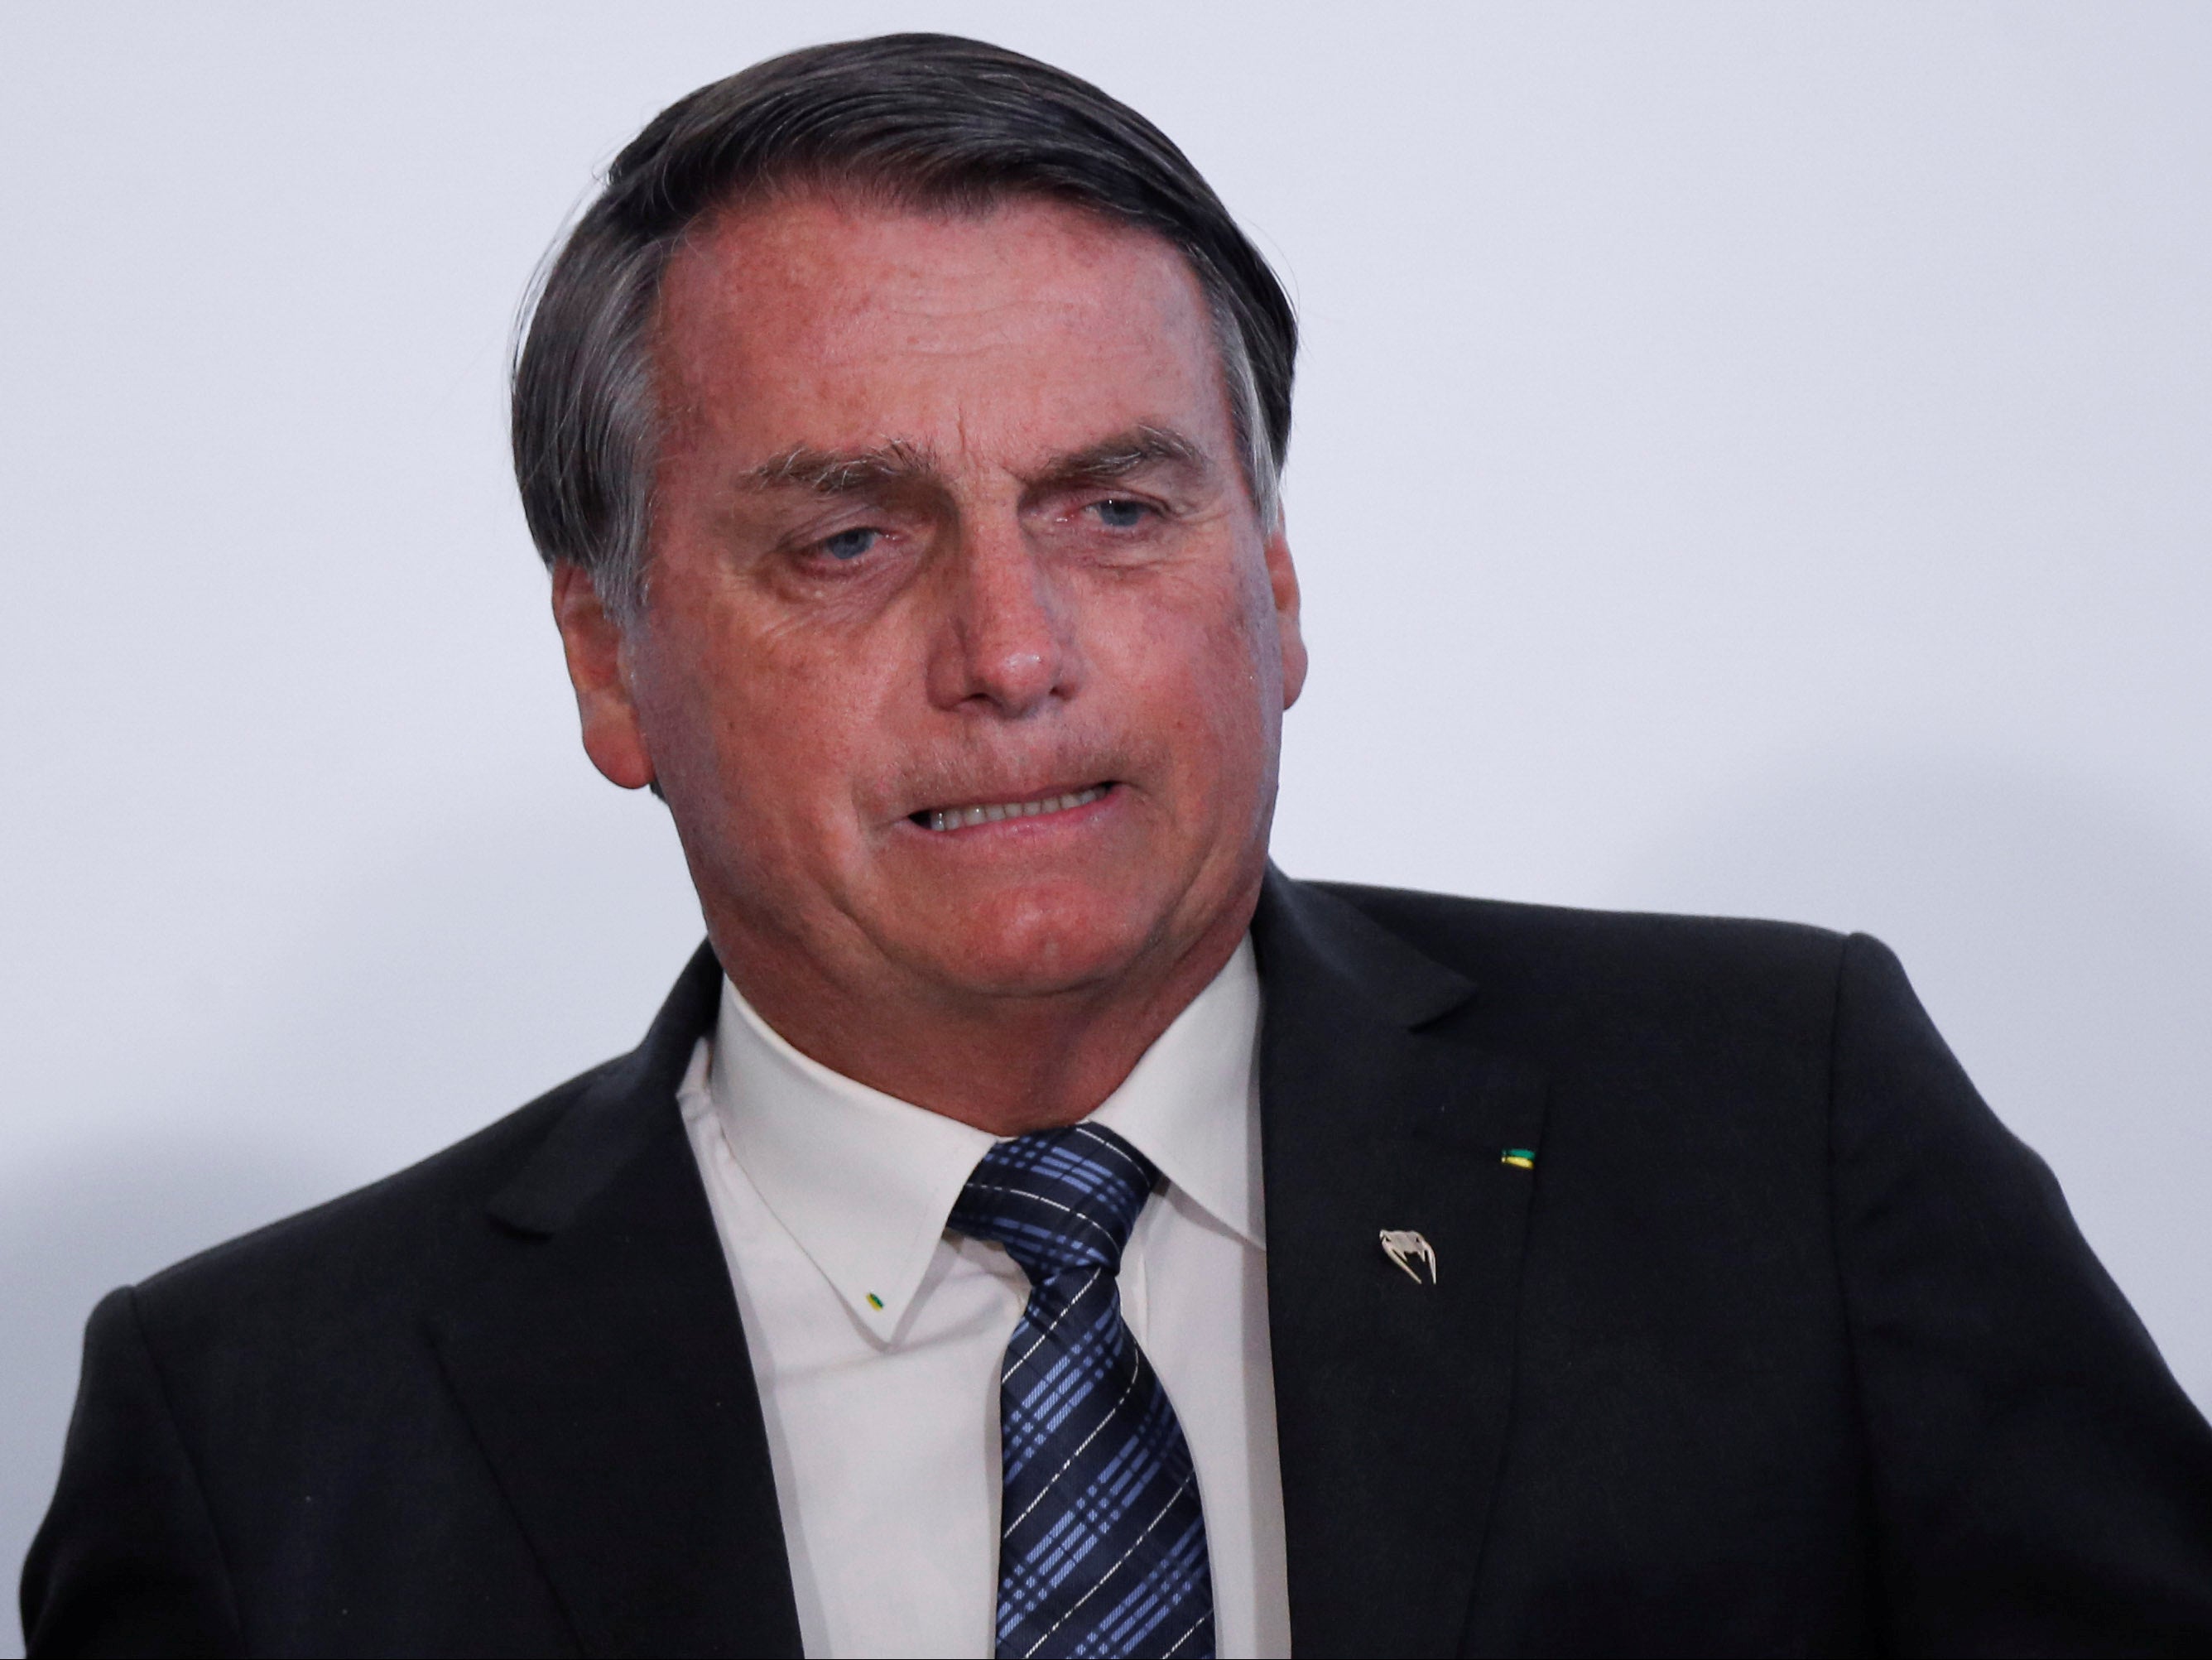 Brazil’s president Jair Bolsonaro